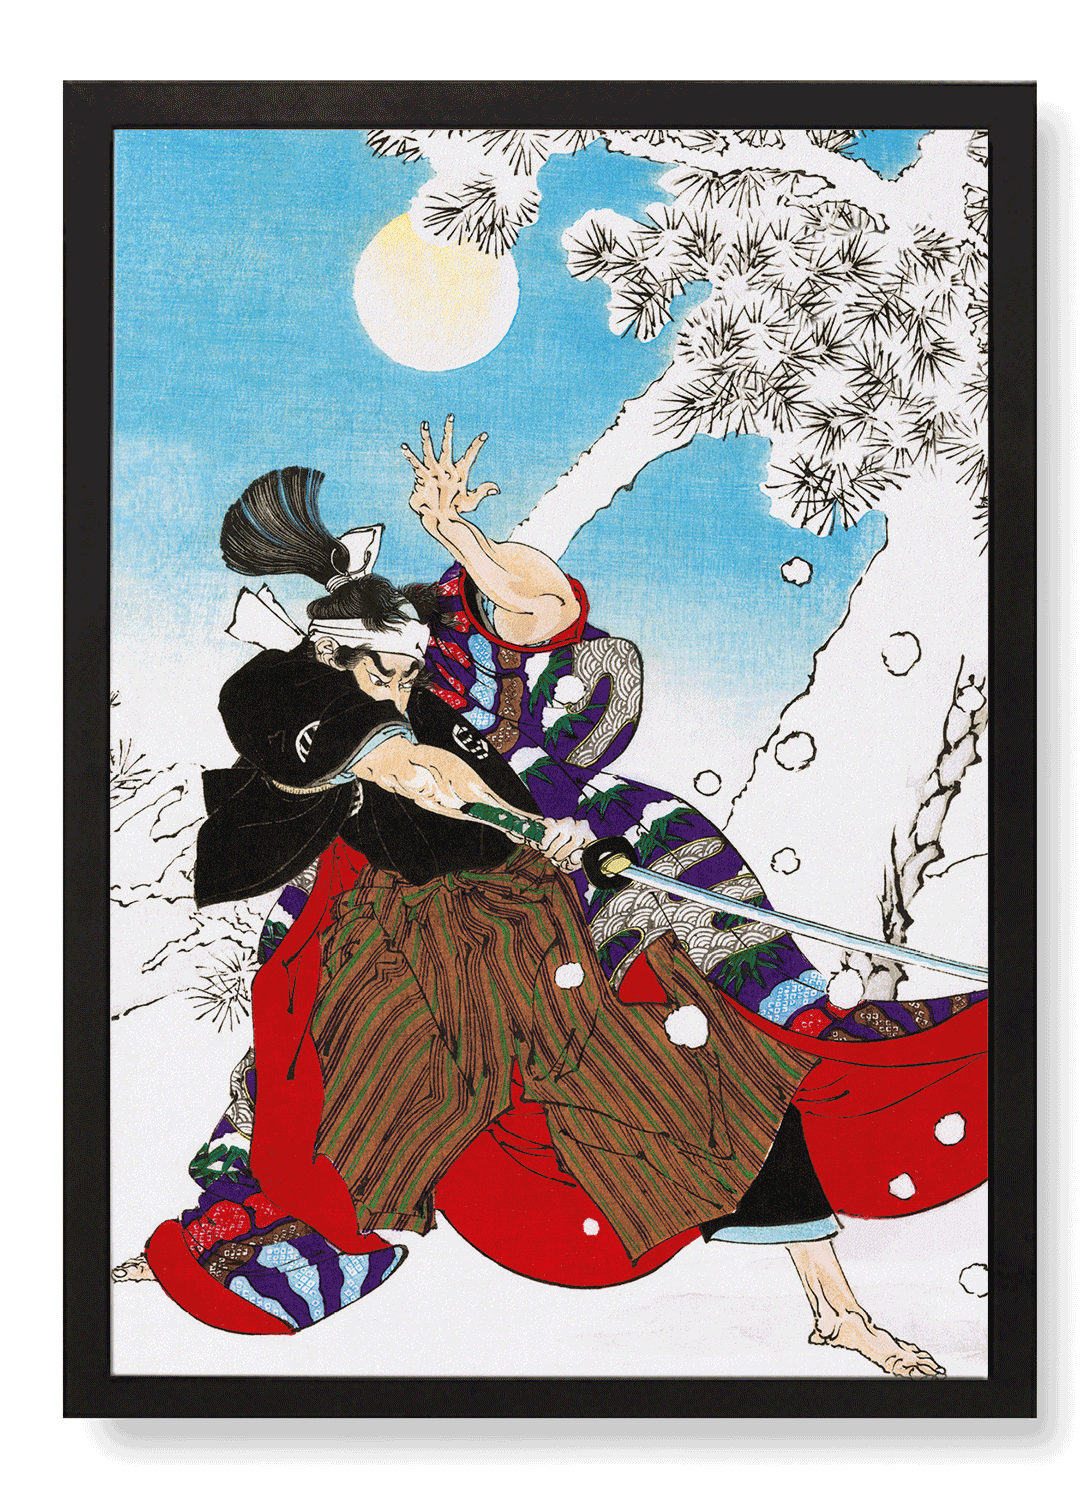 KOBAYASHI IN THE SNOW